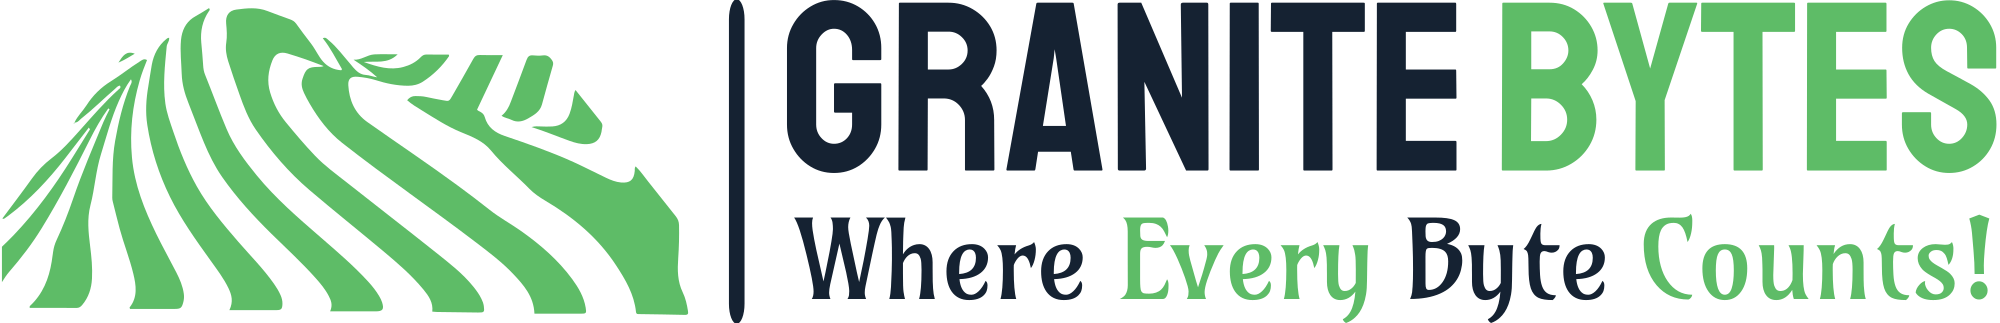 GraniteBytes | Where Every Byte Counts!